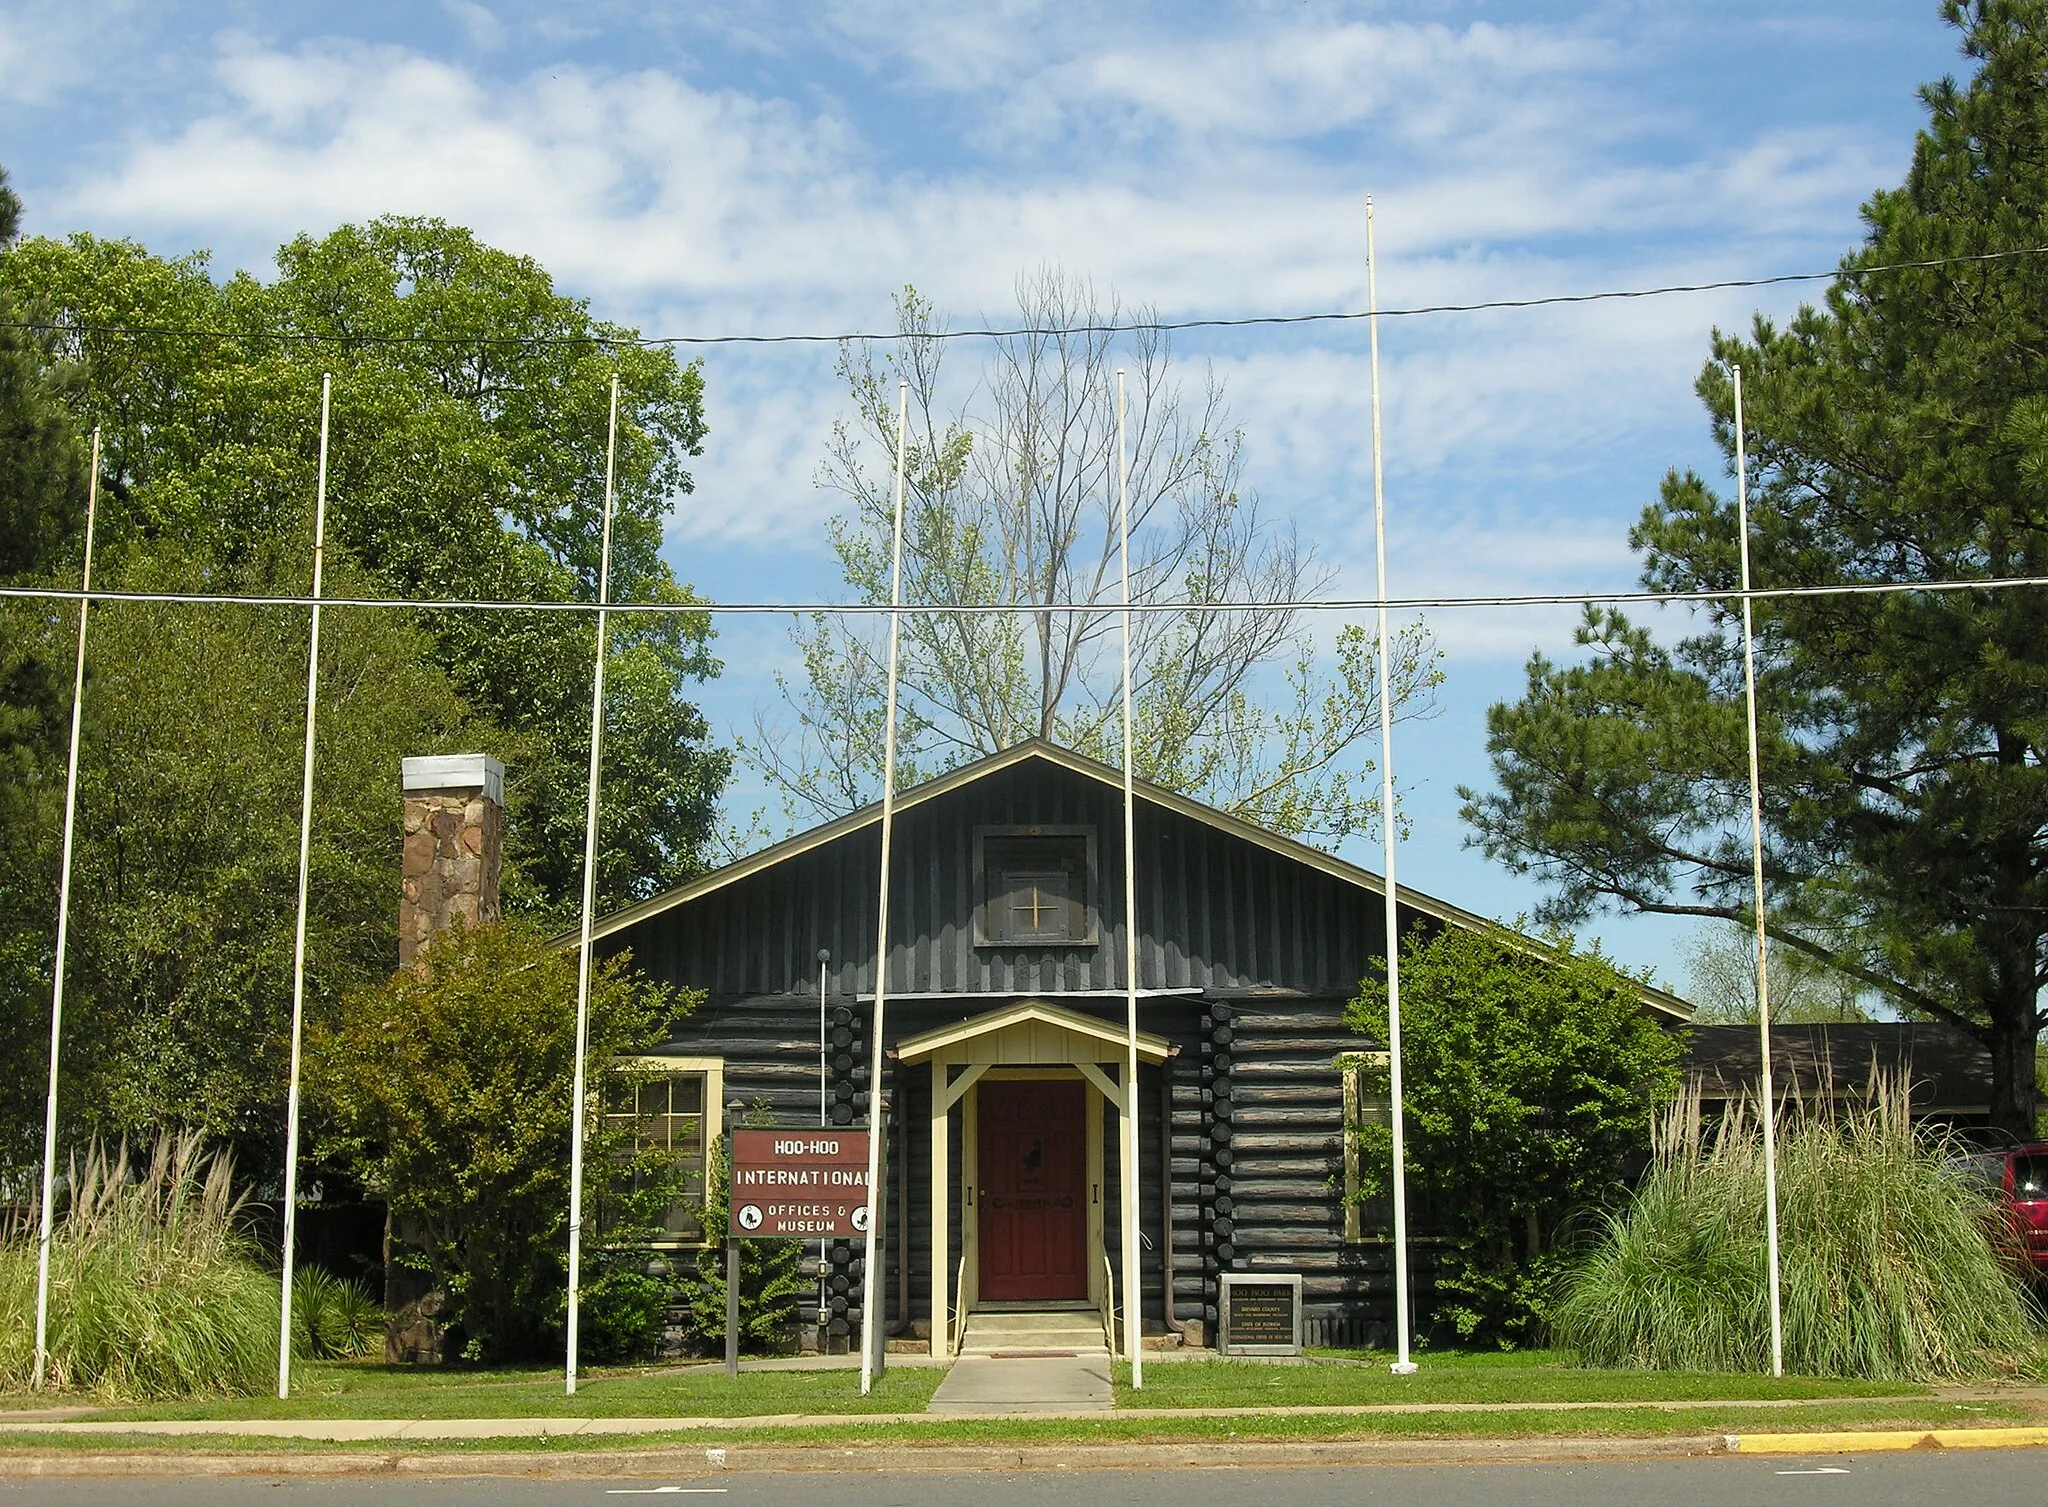 Photo showing: The Hoo Hoo International offices & museum on Main Street in Gurdon, Clark County, Arkansas.